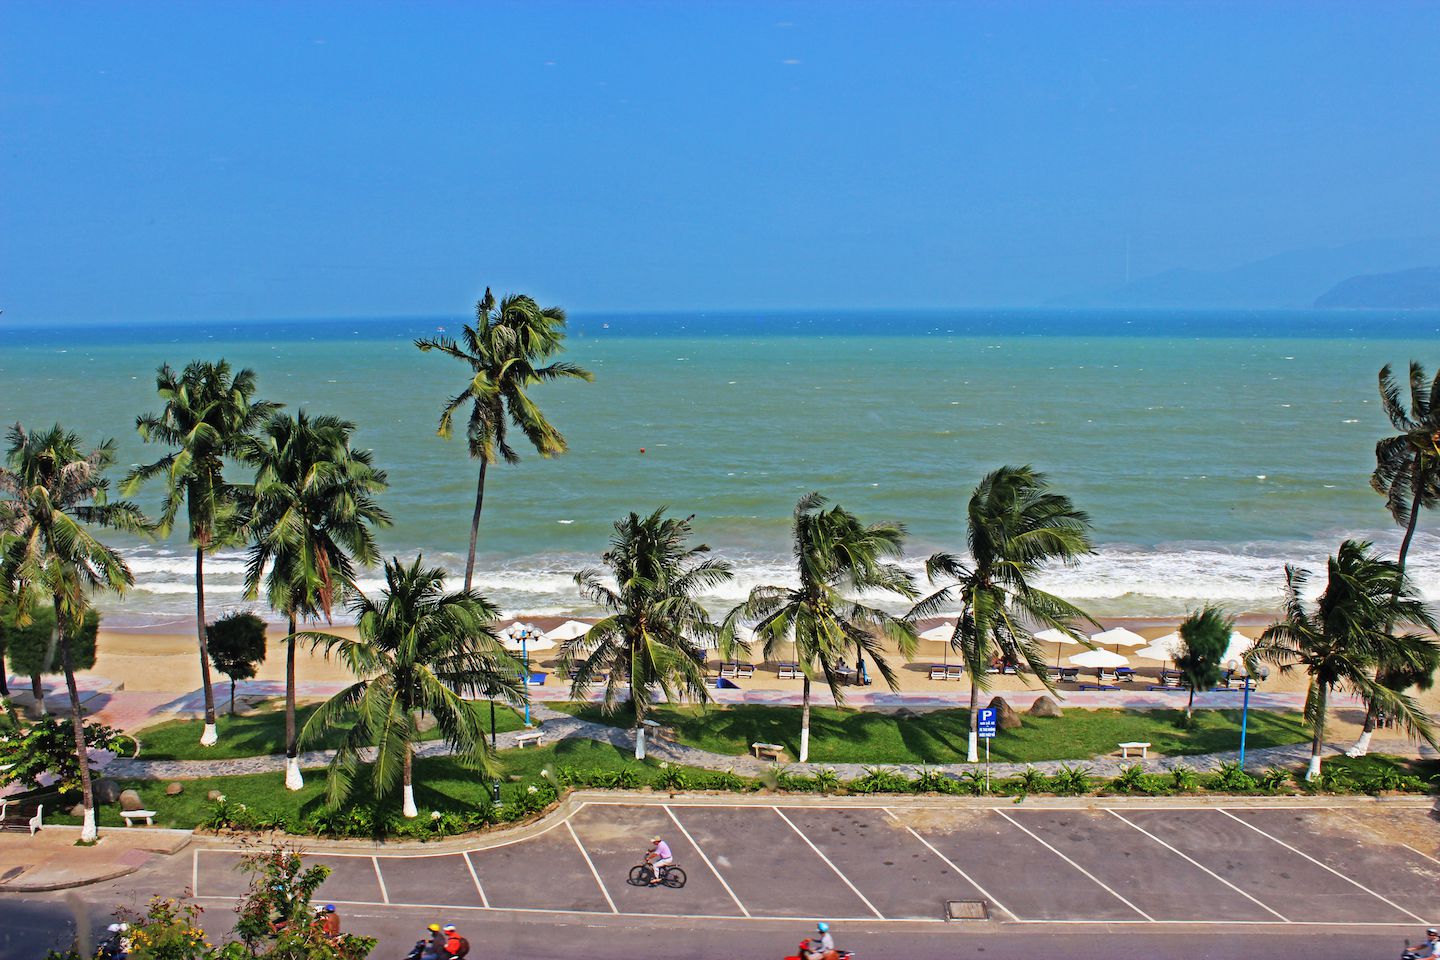 View of Nha Trang beach